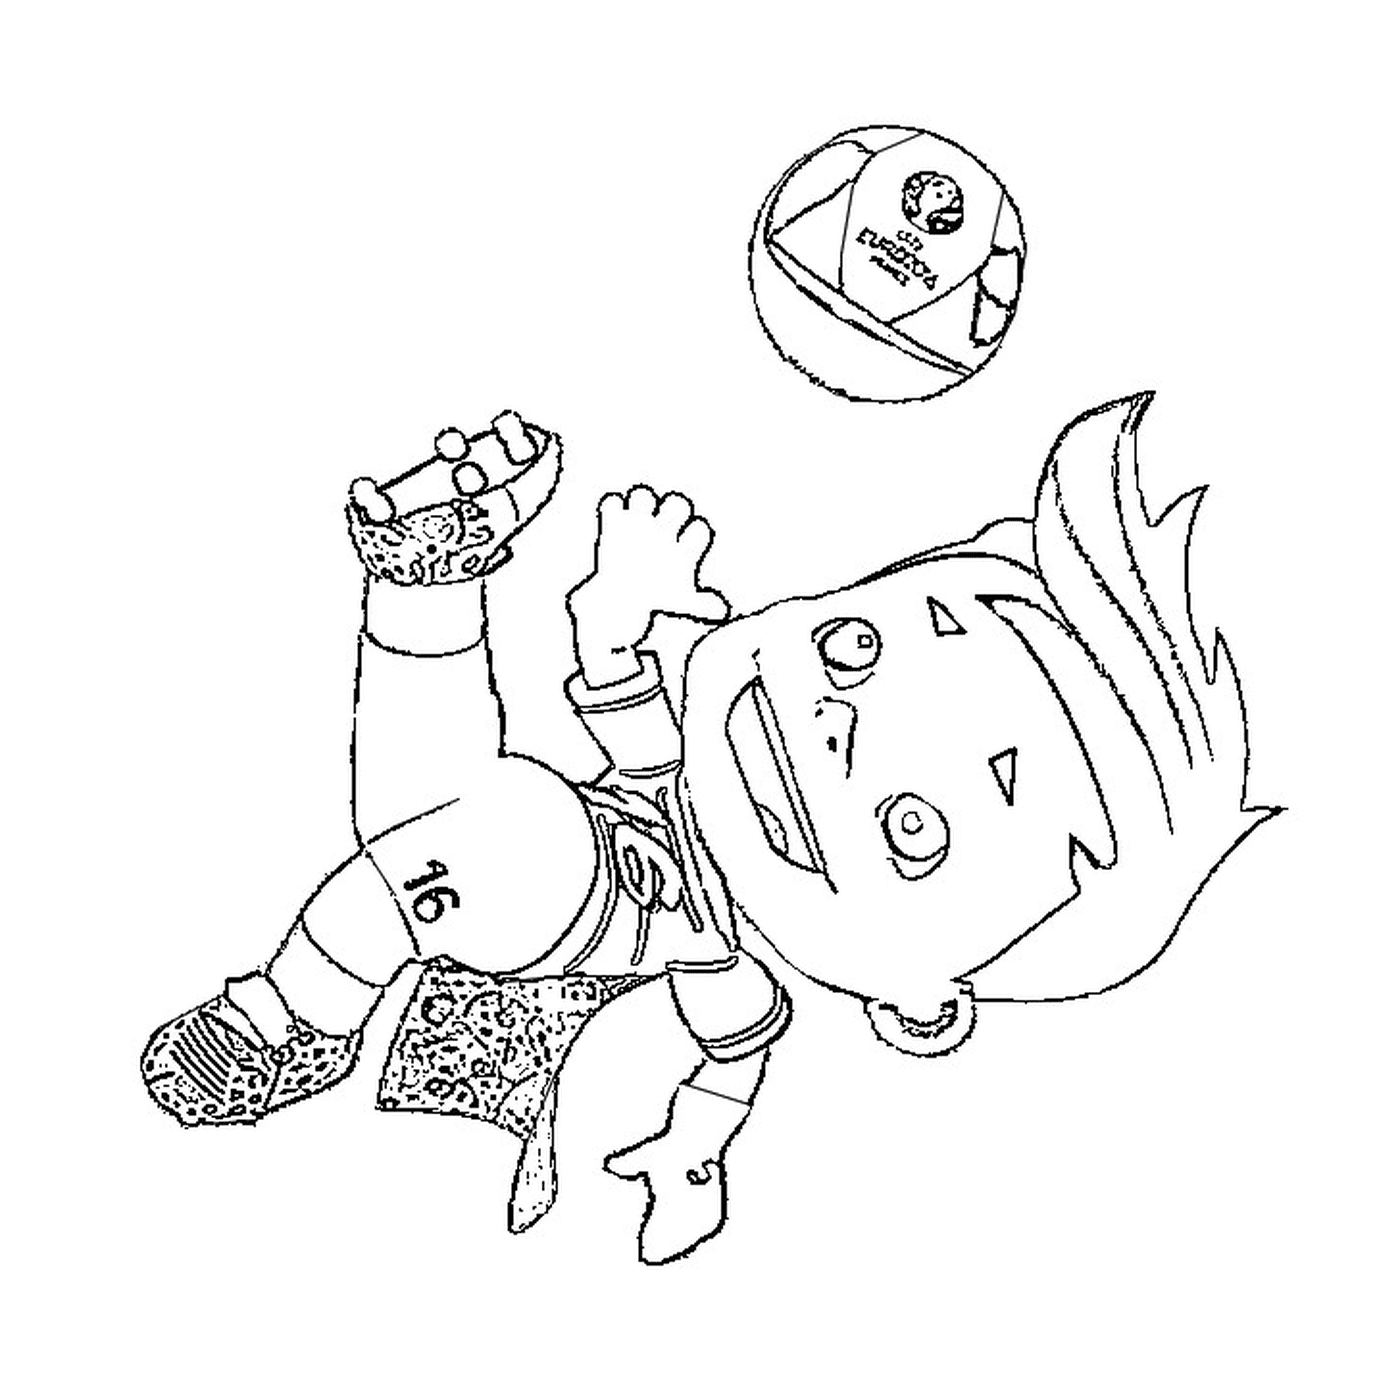  Un chico juega con una pelota 